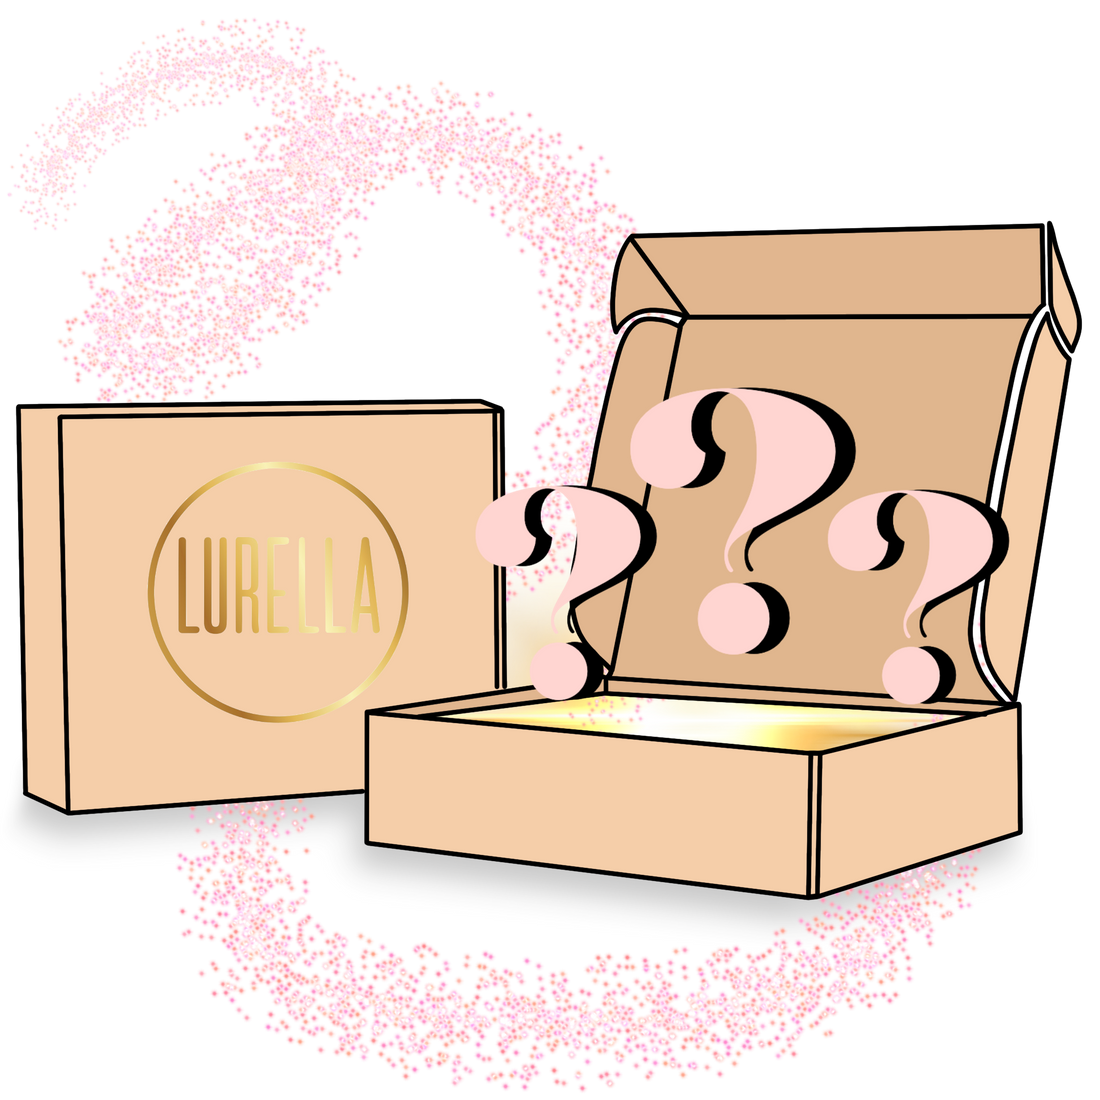 Lurella Cosmetics Mystery Box 1